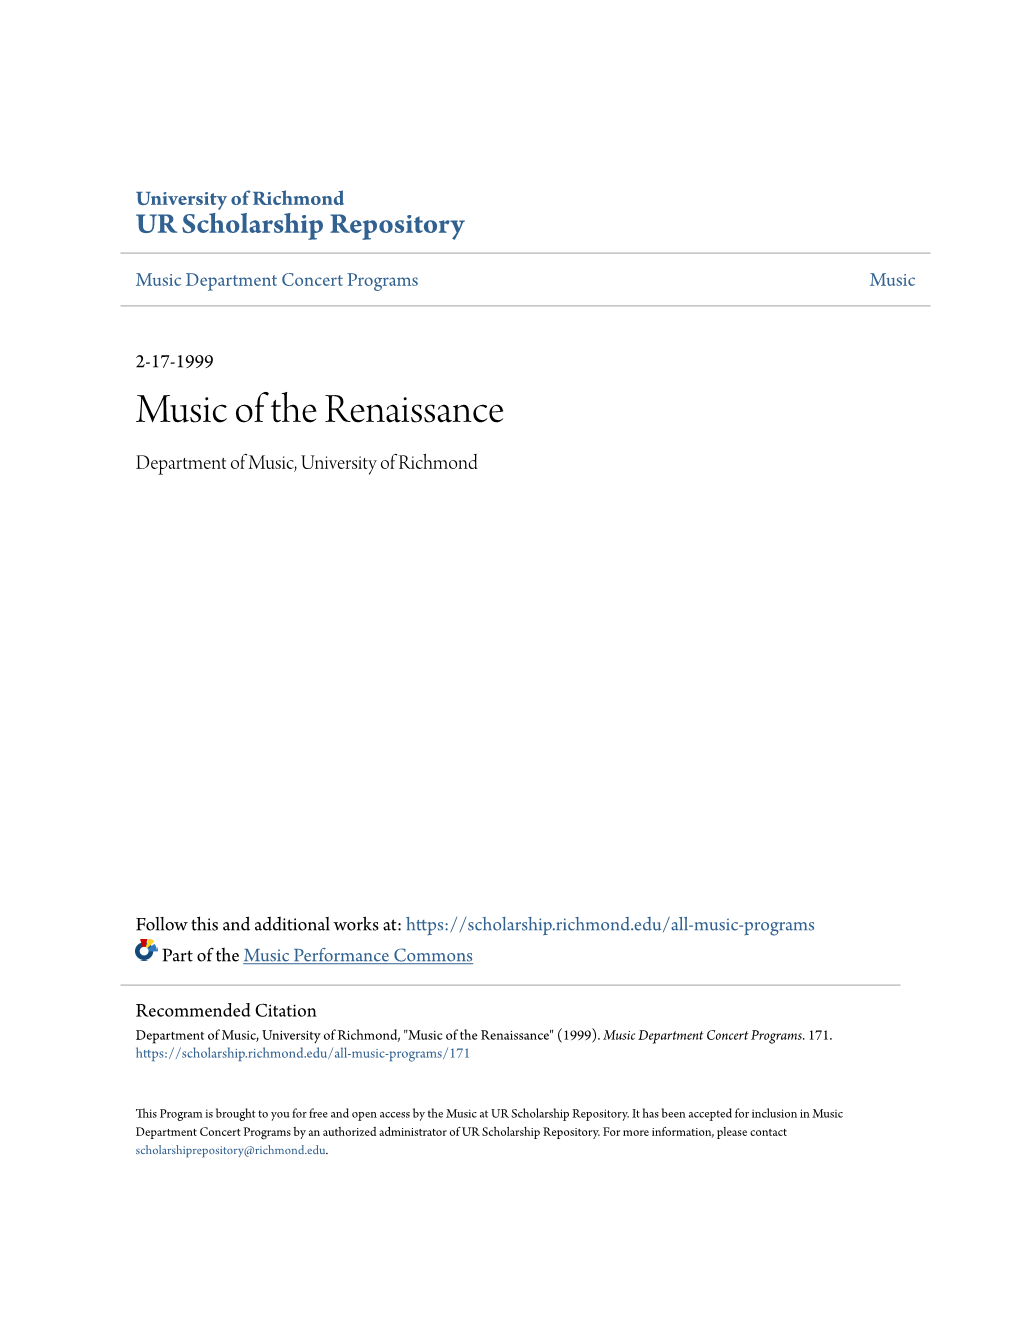 Music of the Renaissance Department of Music, University of Richmond